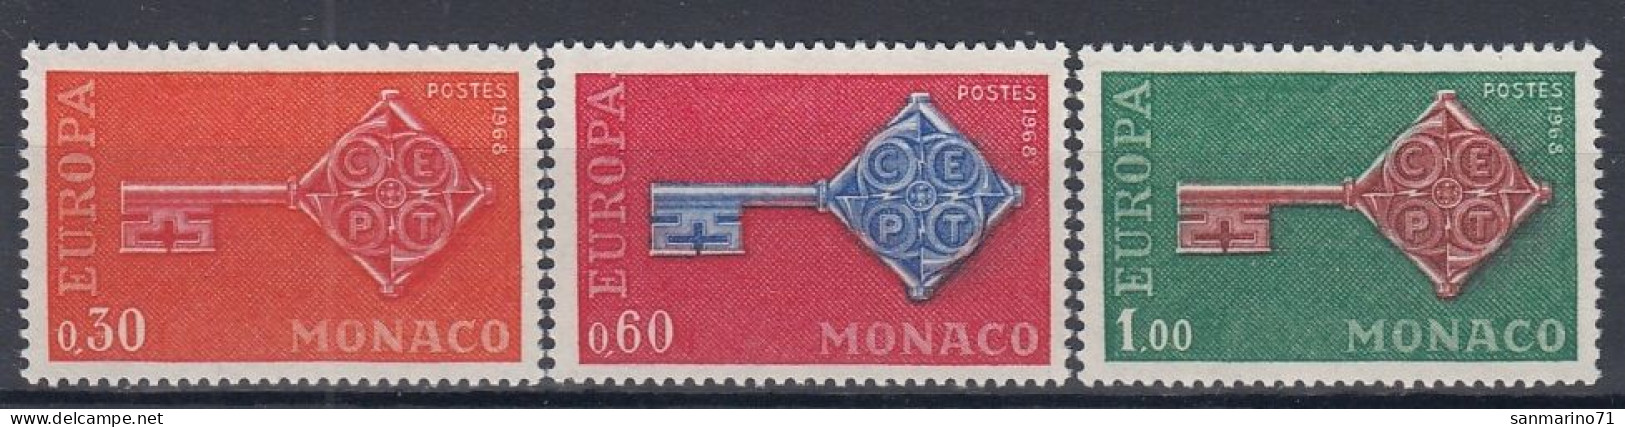 MONACO 879-881,unused - 1968